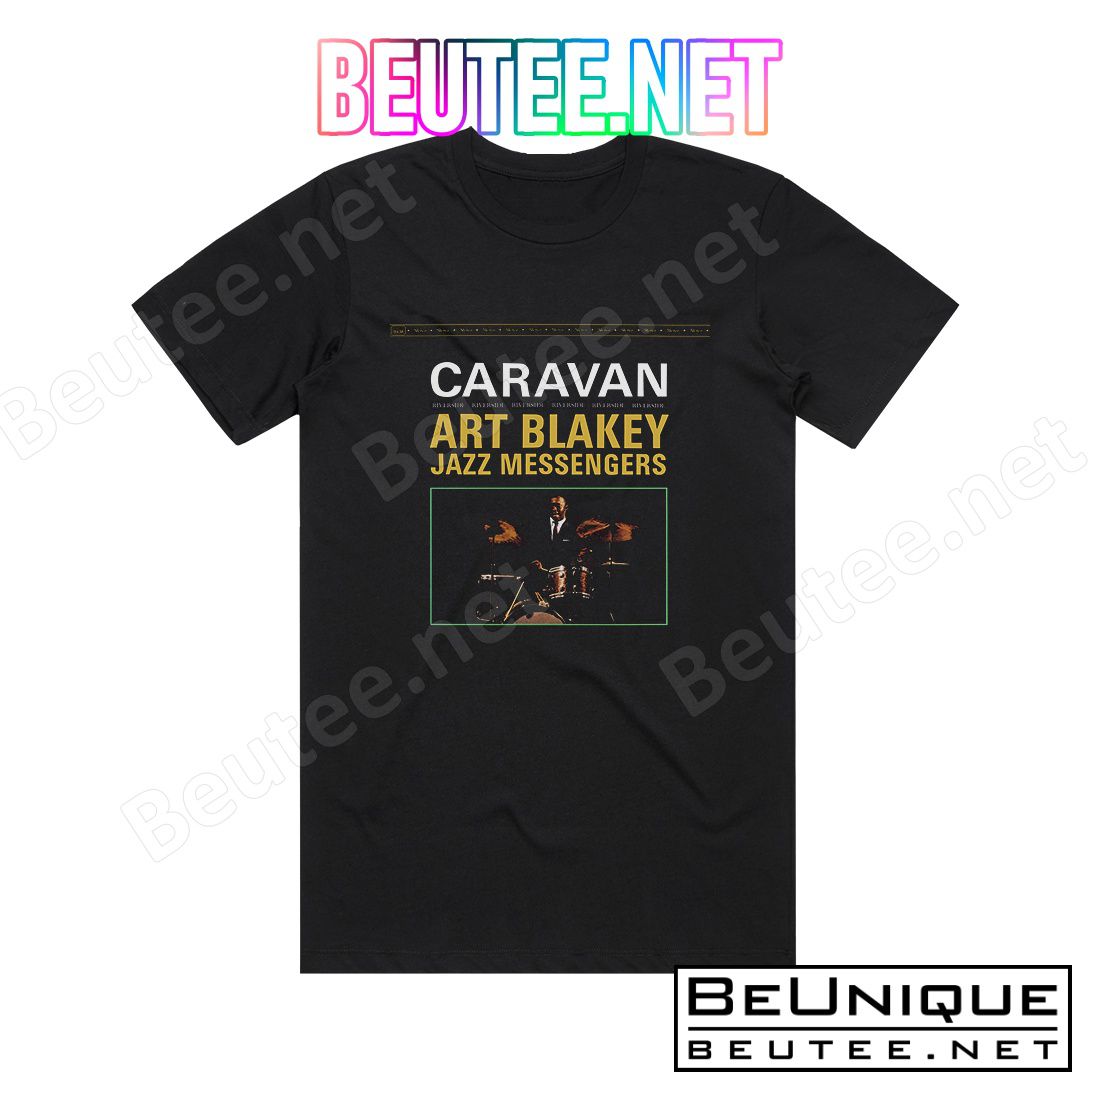 Art Blakey and The Jazz Messengers Caravan Album Cover T-Shirt